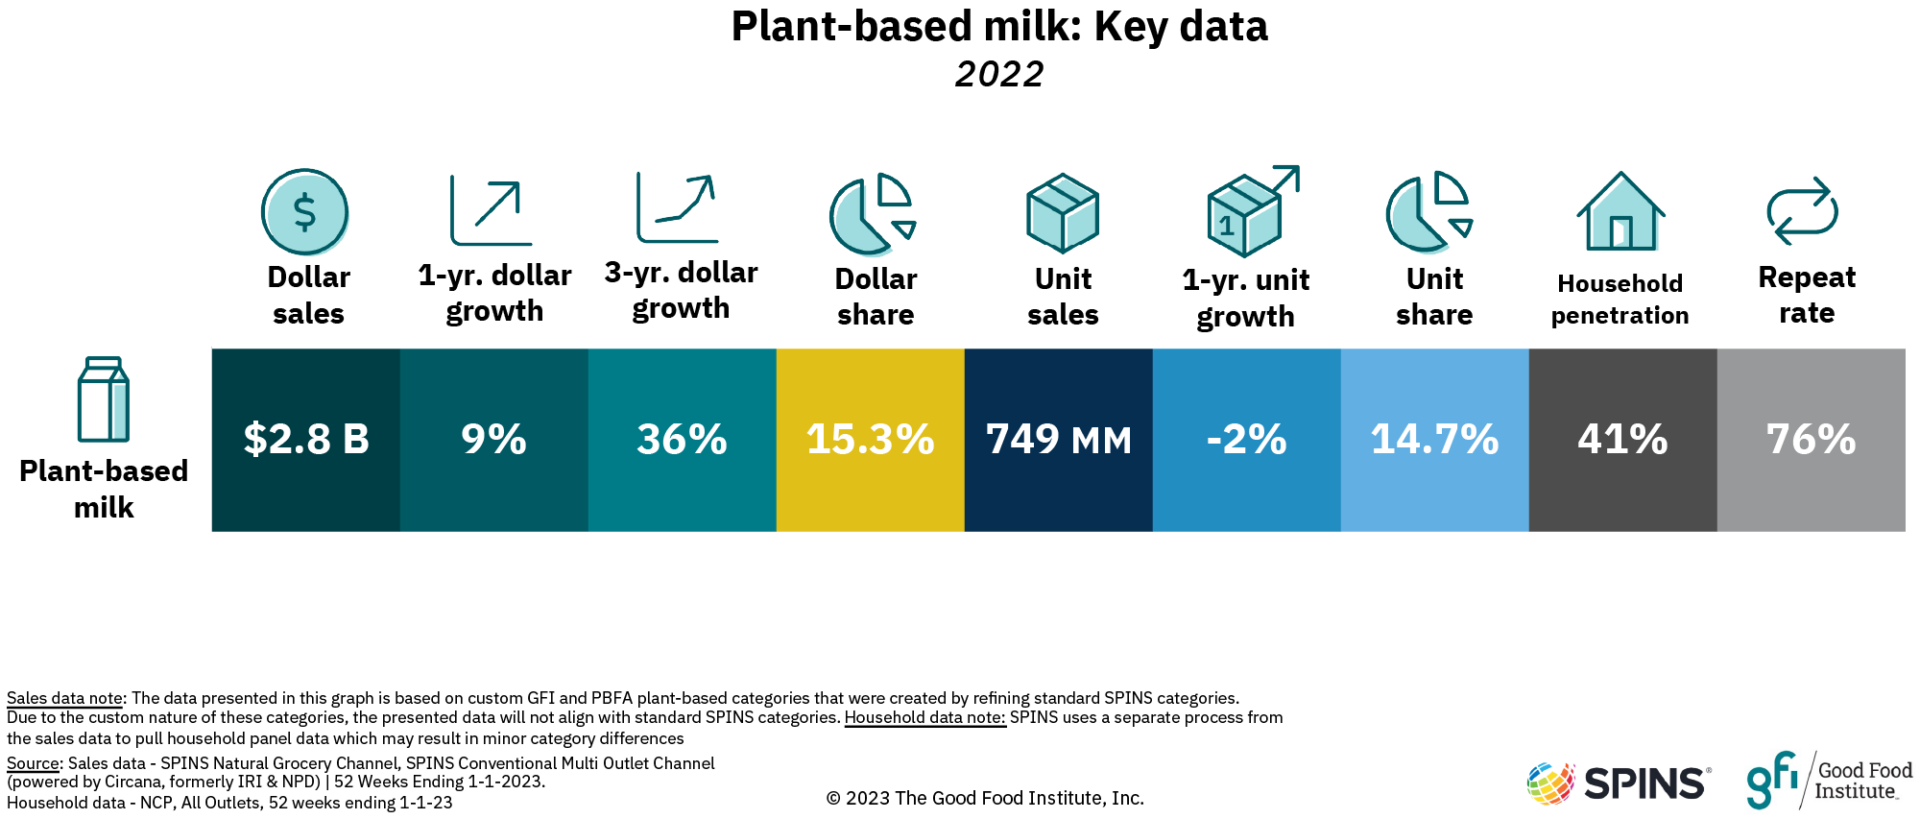 Plant-based milk key sales data summary